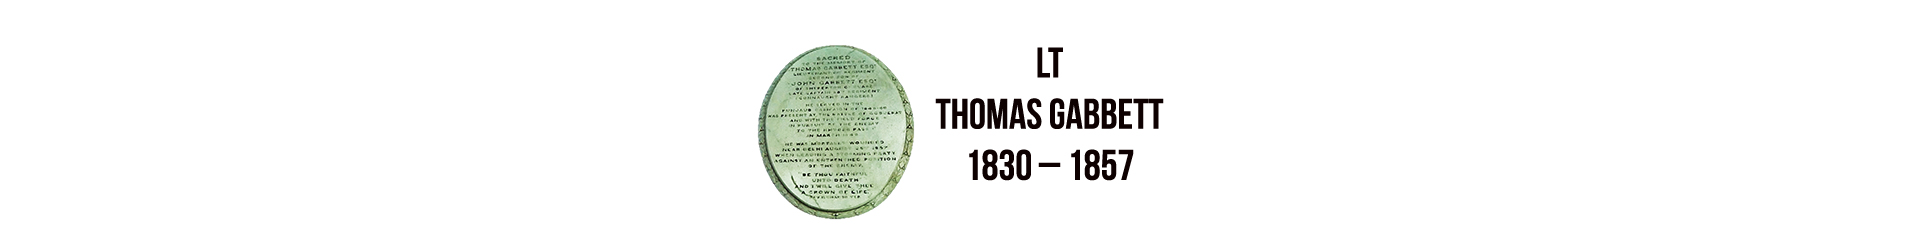 Lt Thomas Gabbett 1830 – 1857